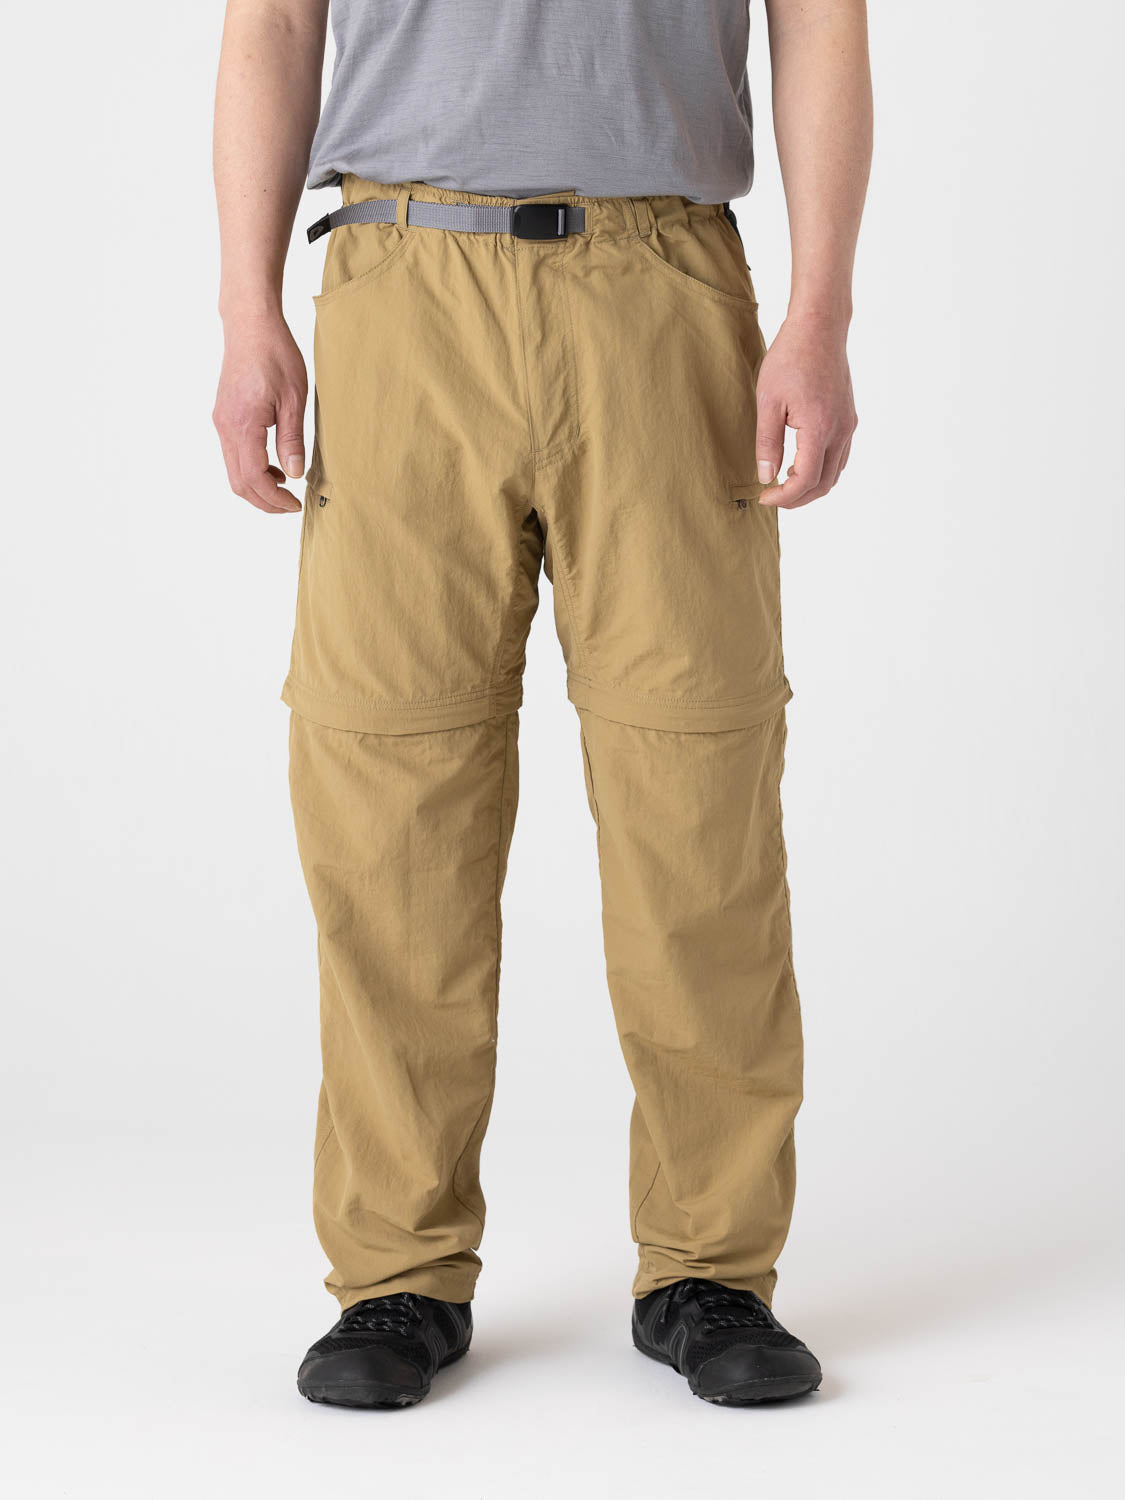 【Trail Bum】Thru-hiker Zip Off Pants